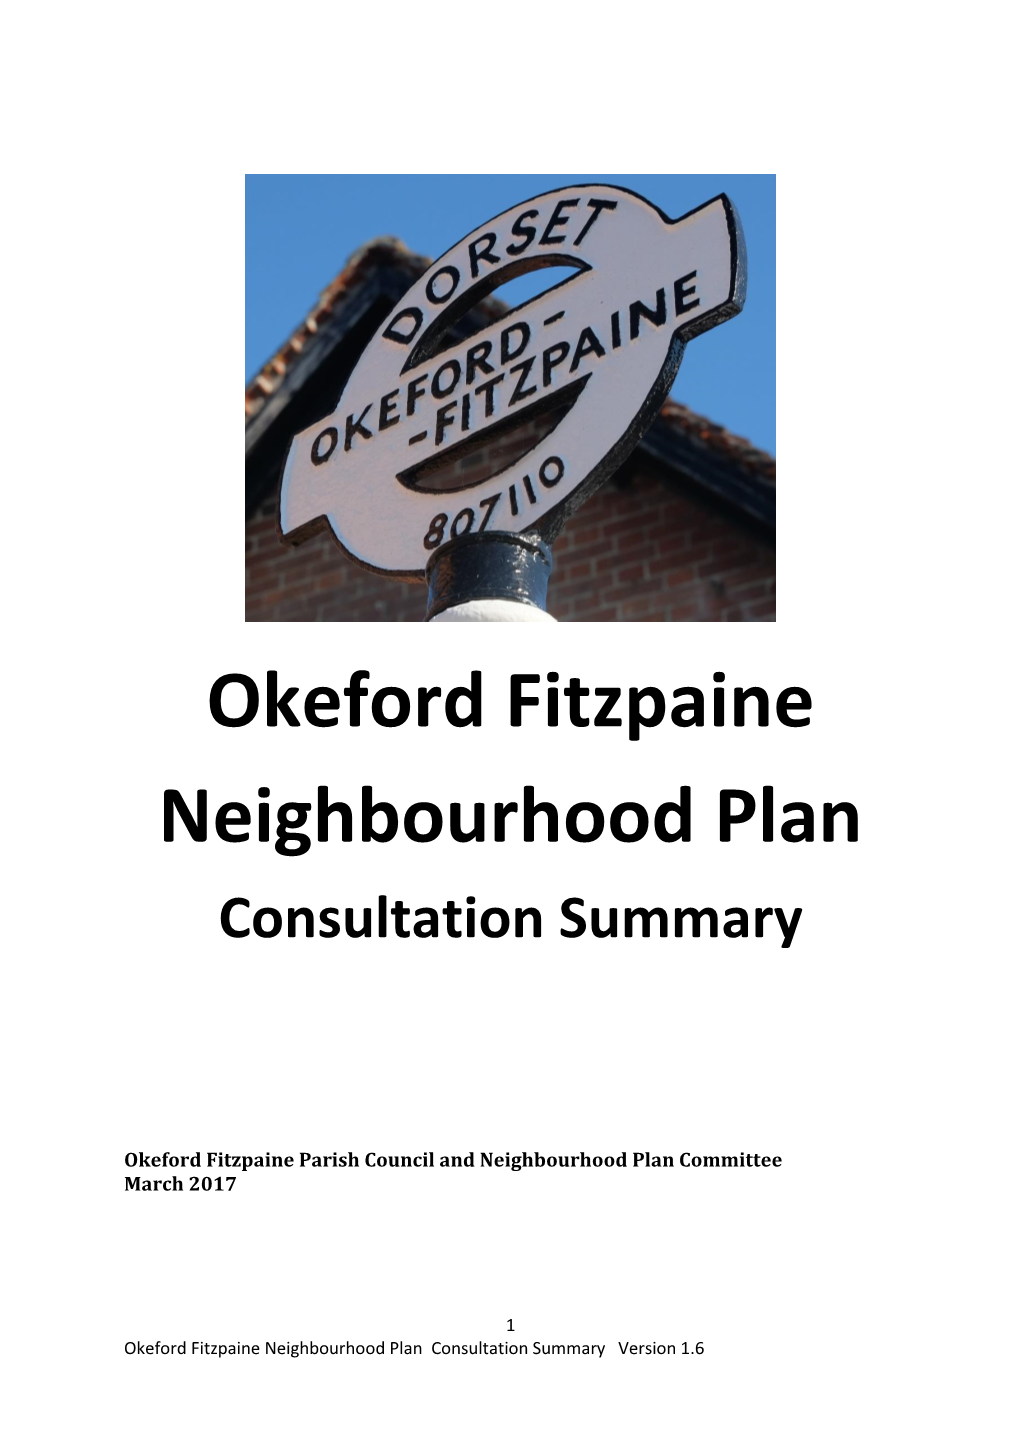 Okeford Fitzpaine Neighbourhood Plan Consultation Summary